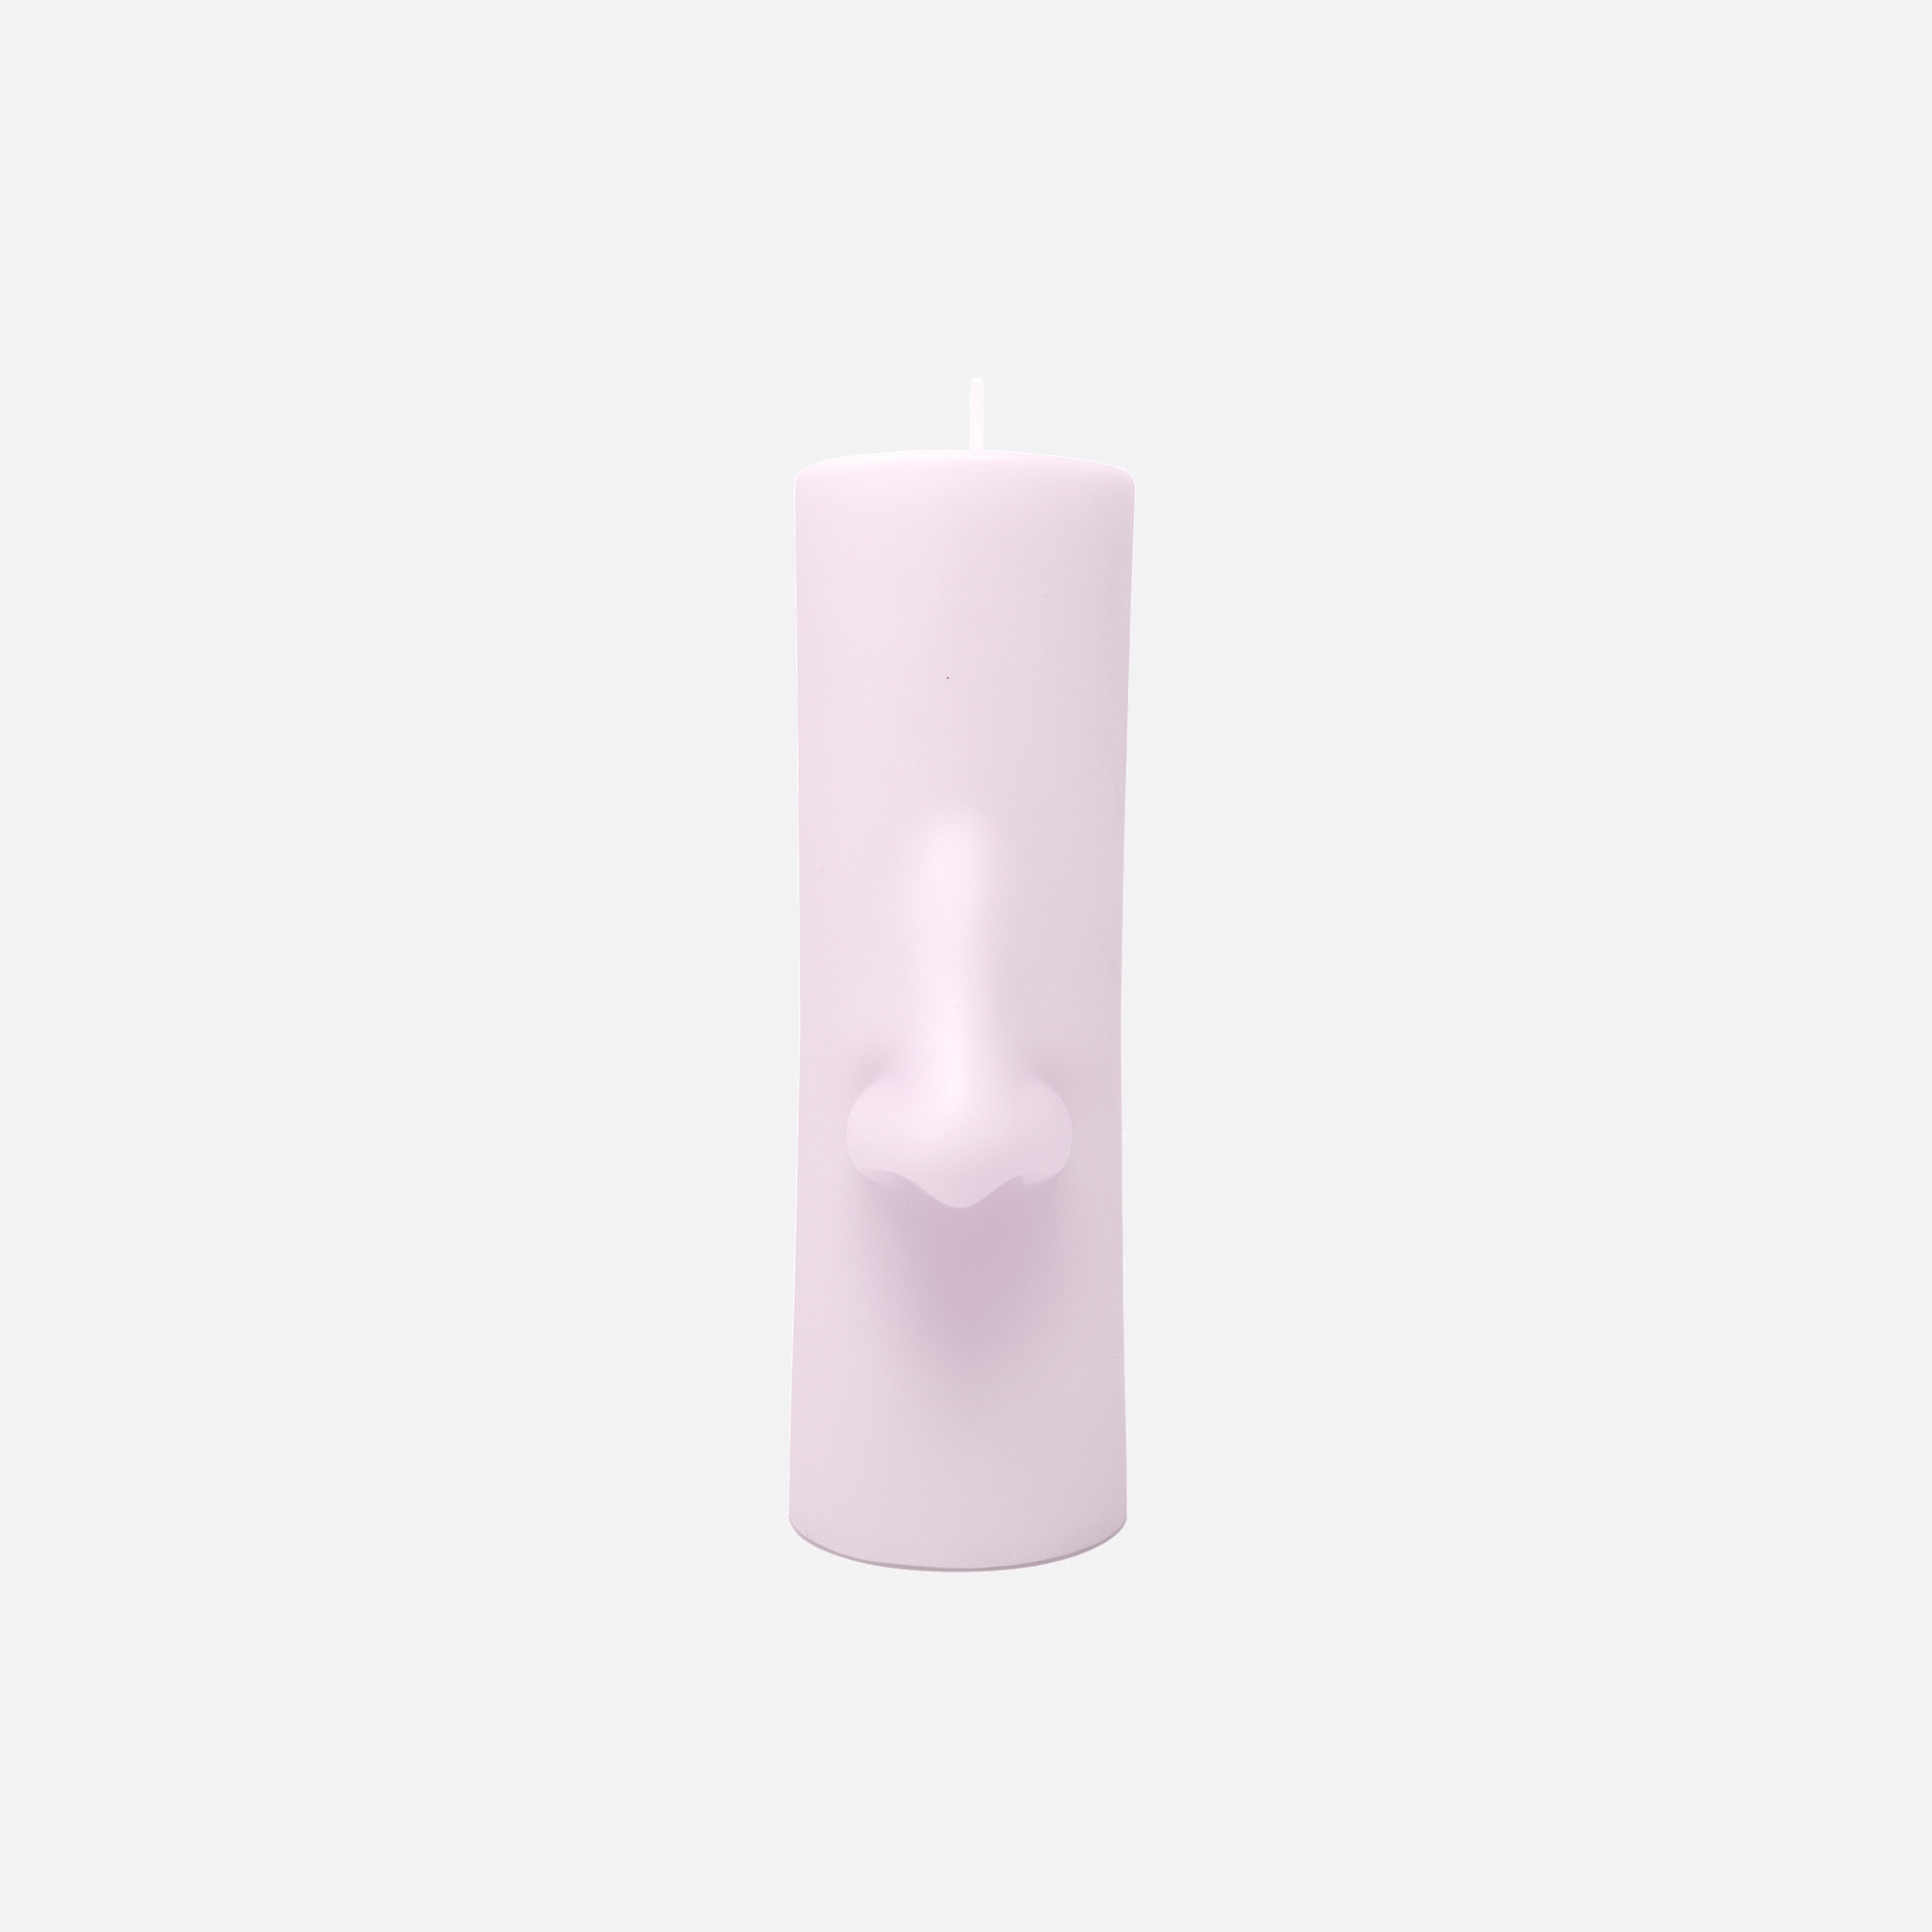 Nose Form Candle, lavender